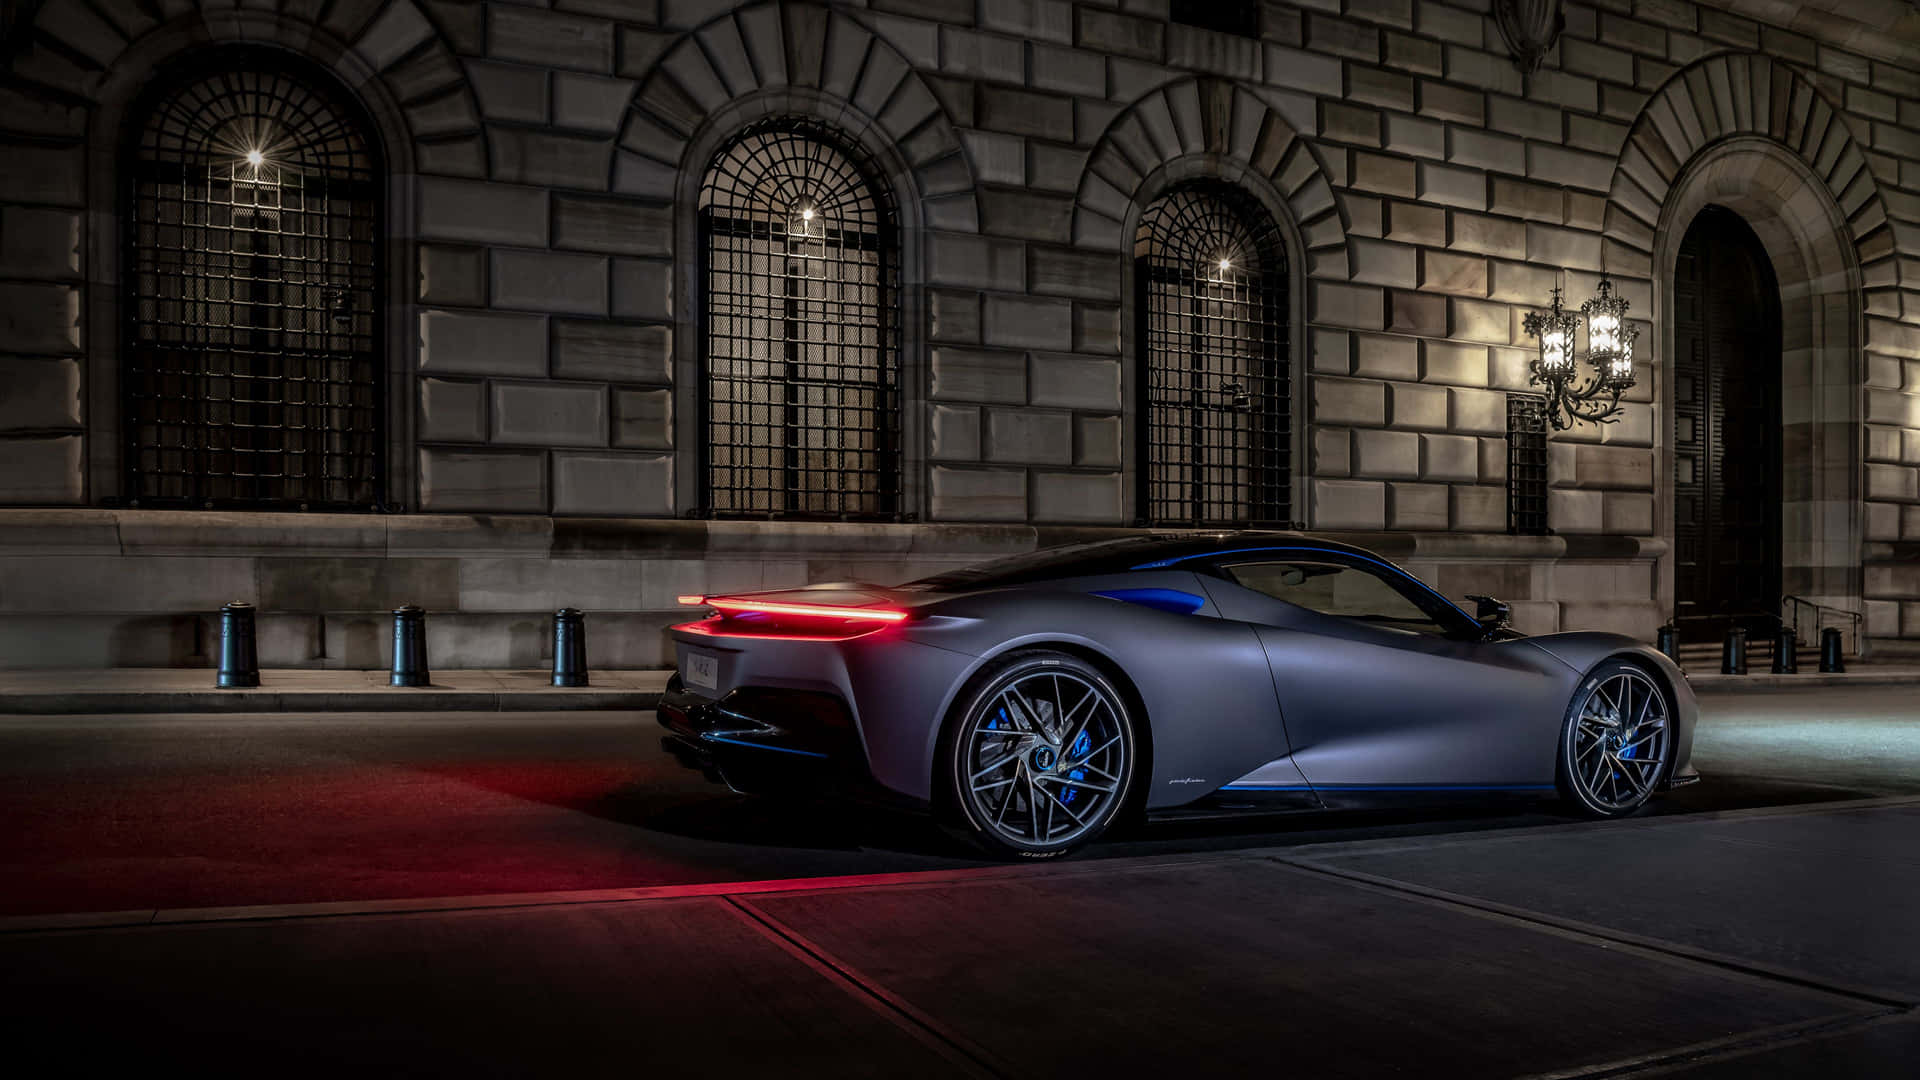 Caption: Luxurious Pininfarina H2 Speed Concept Sportscar Wallpaper